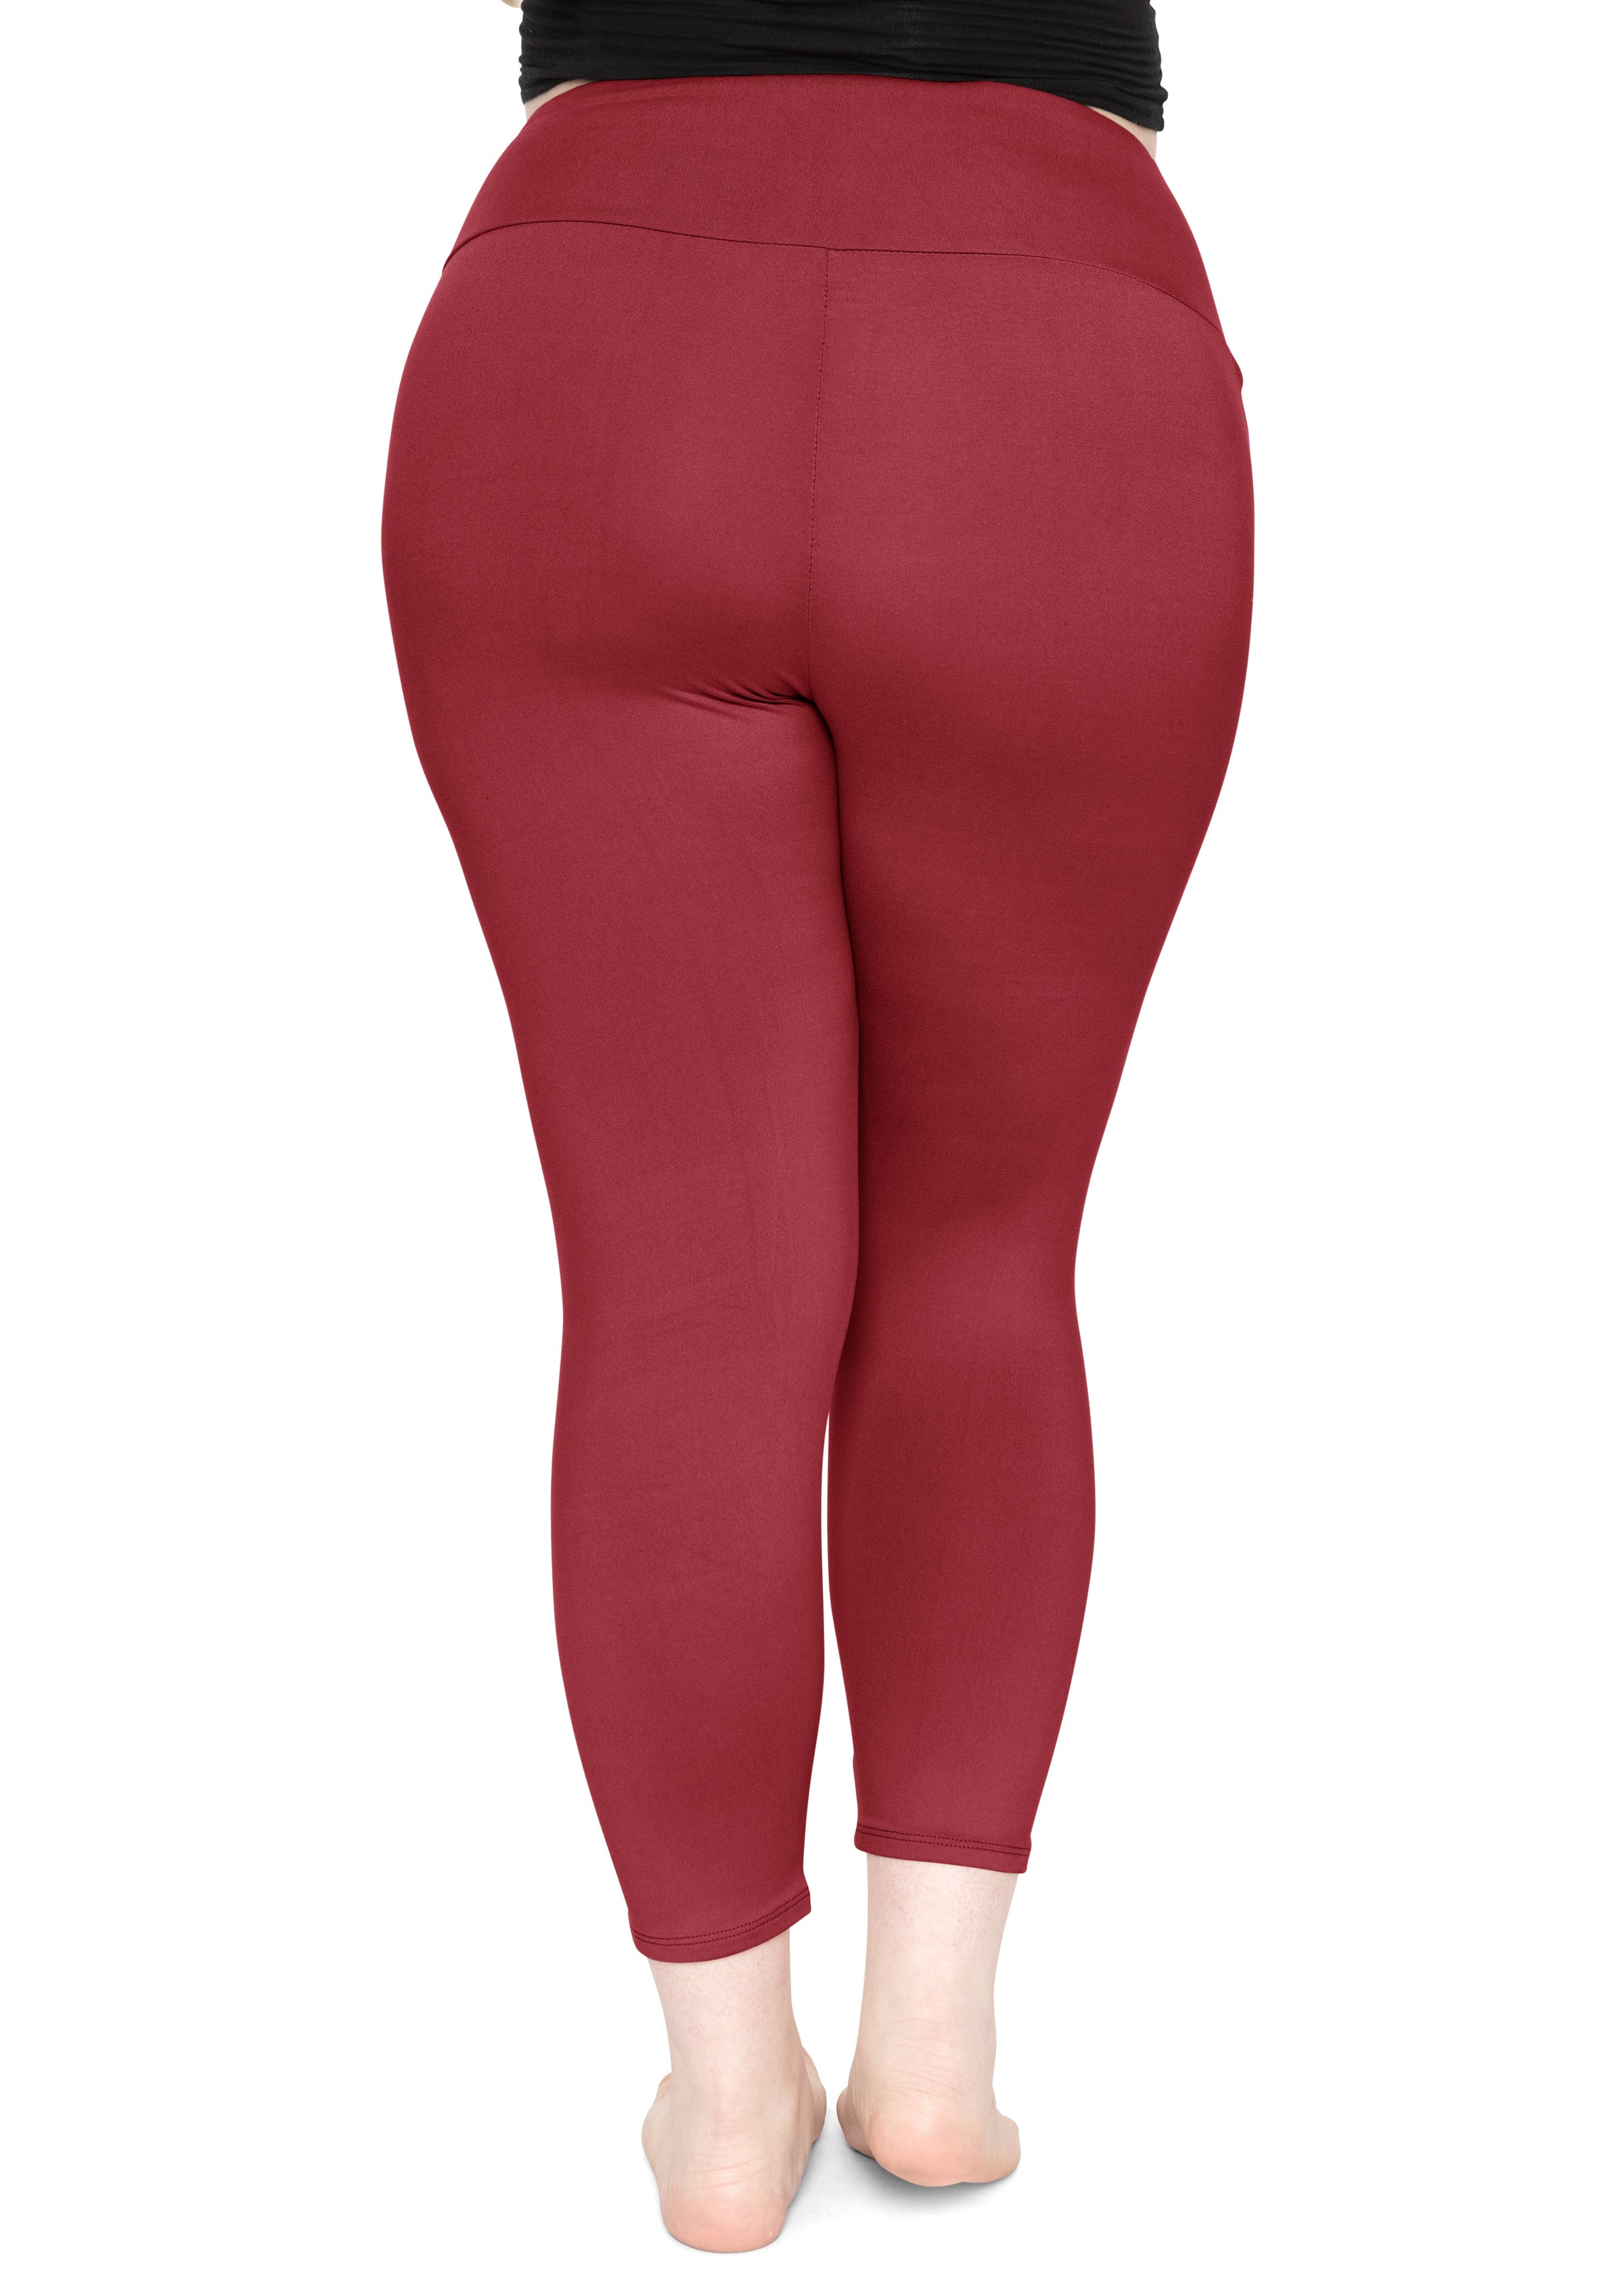 Adjustable Waist Ruched Leggings - Apparel - PINK  Ruched leggings,  Colorful leggings, Red leggings